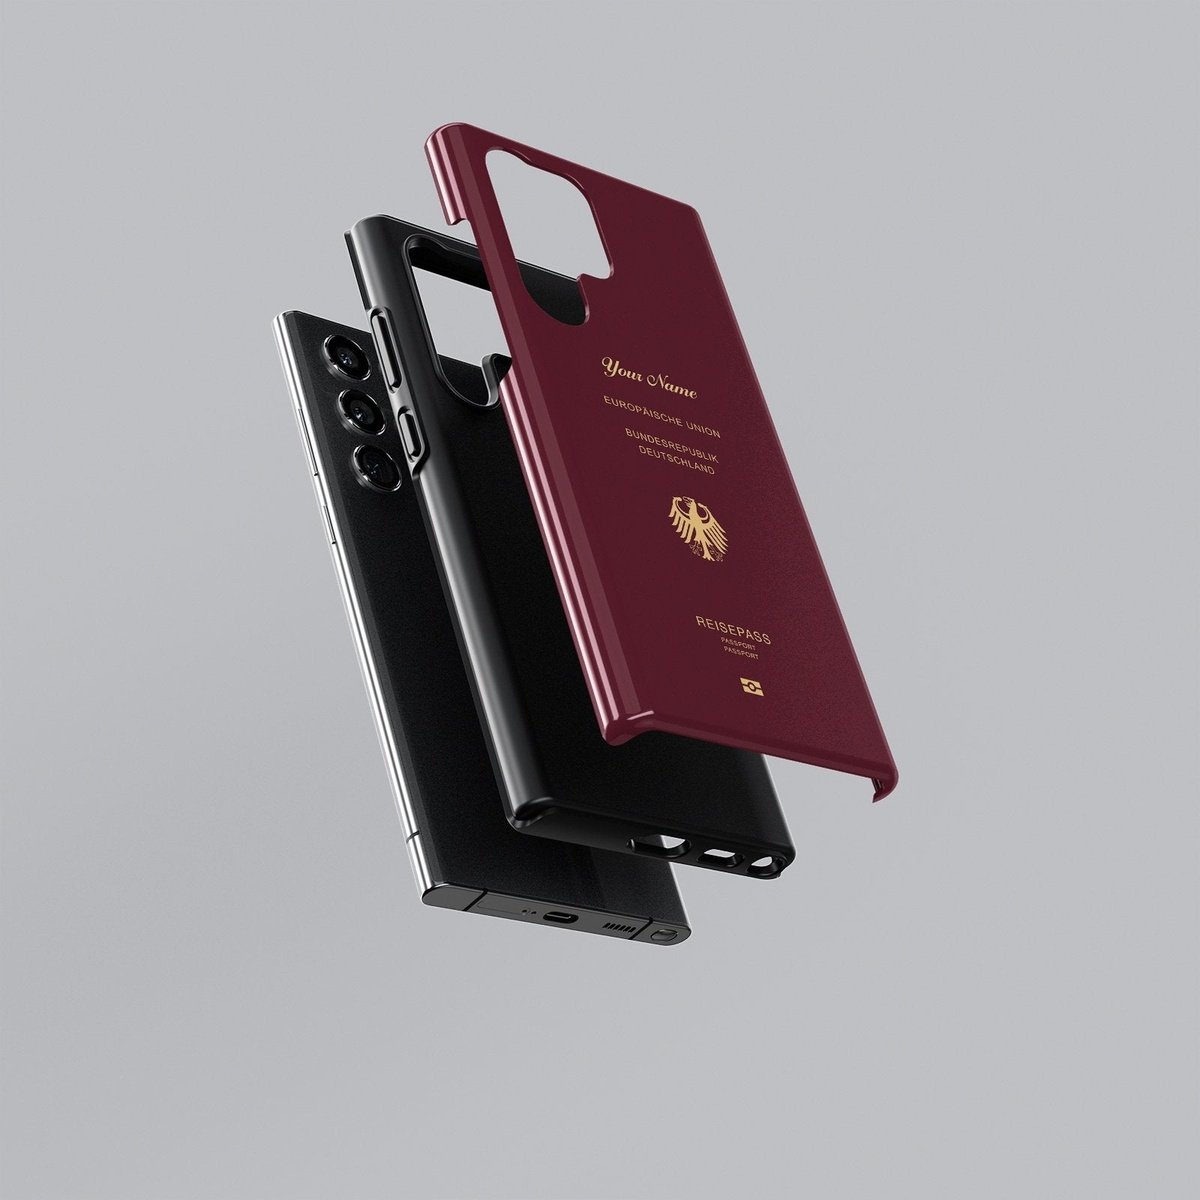 Germany Passport - Samsung Galaxy S Case